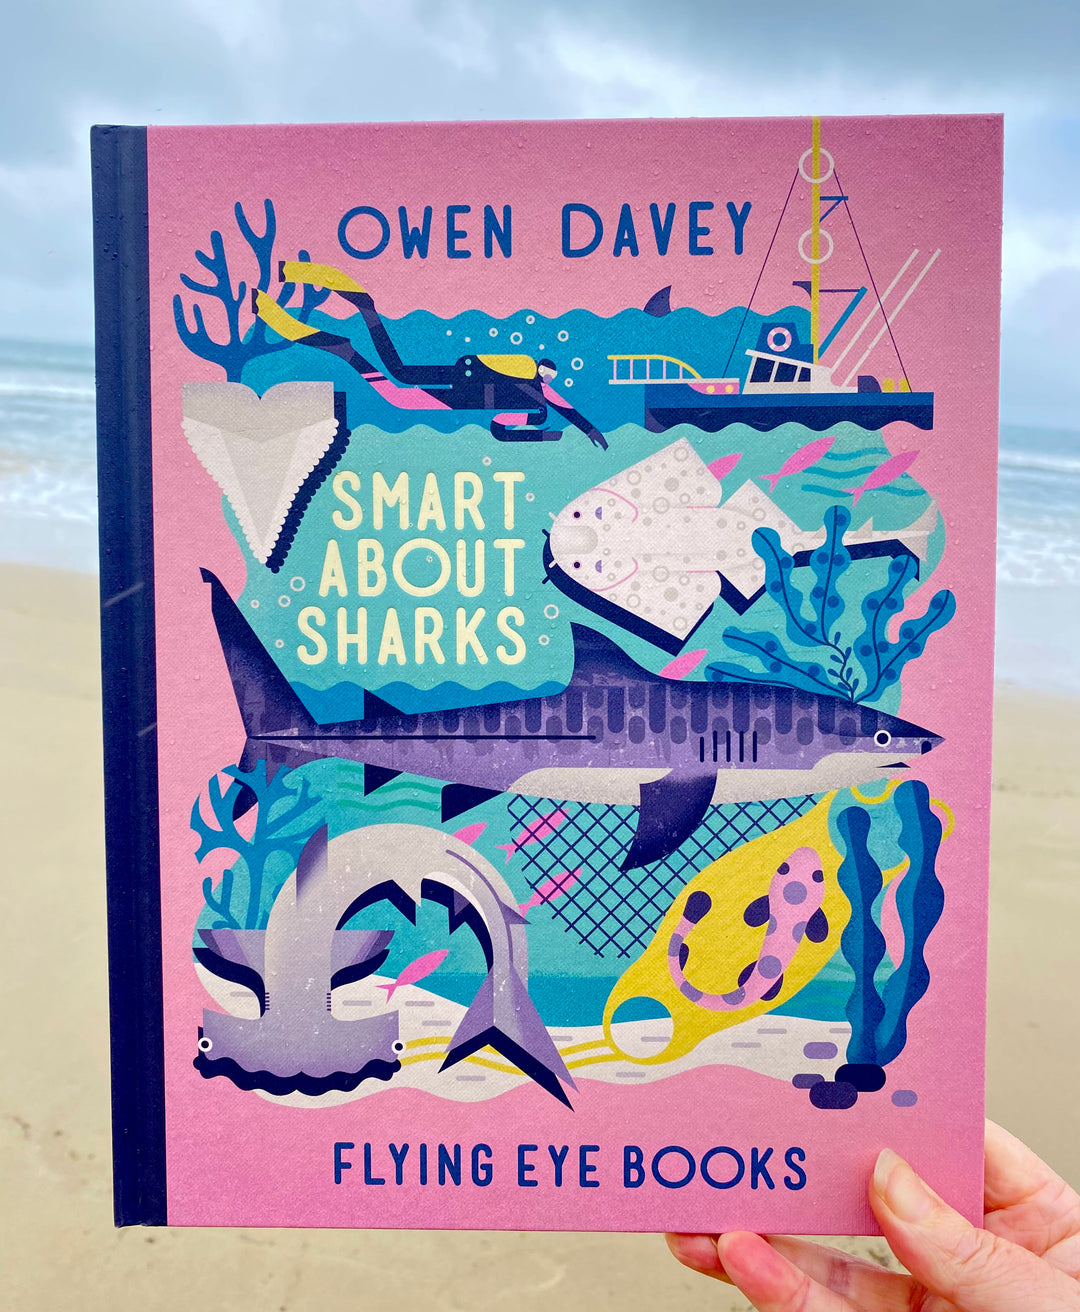 Smart About Sharks by Owen Davey